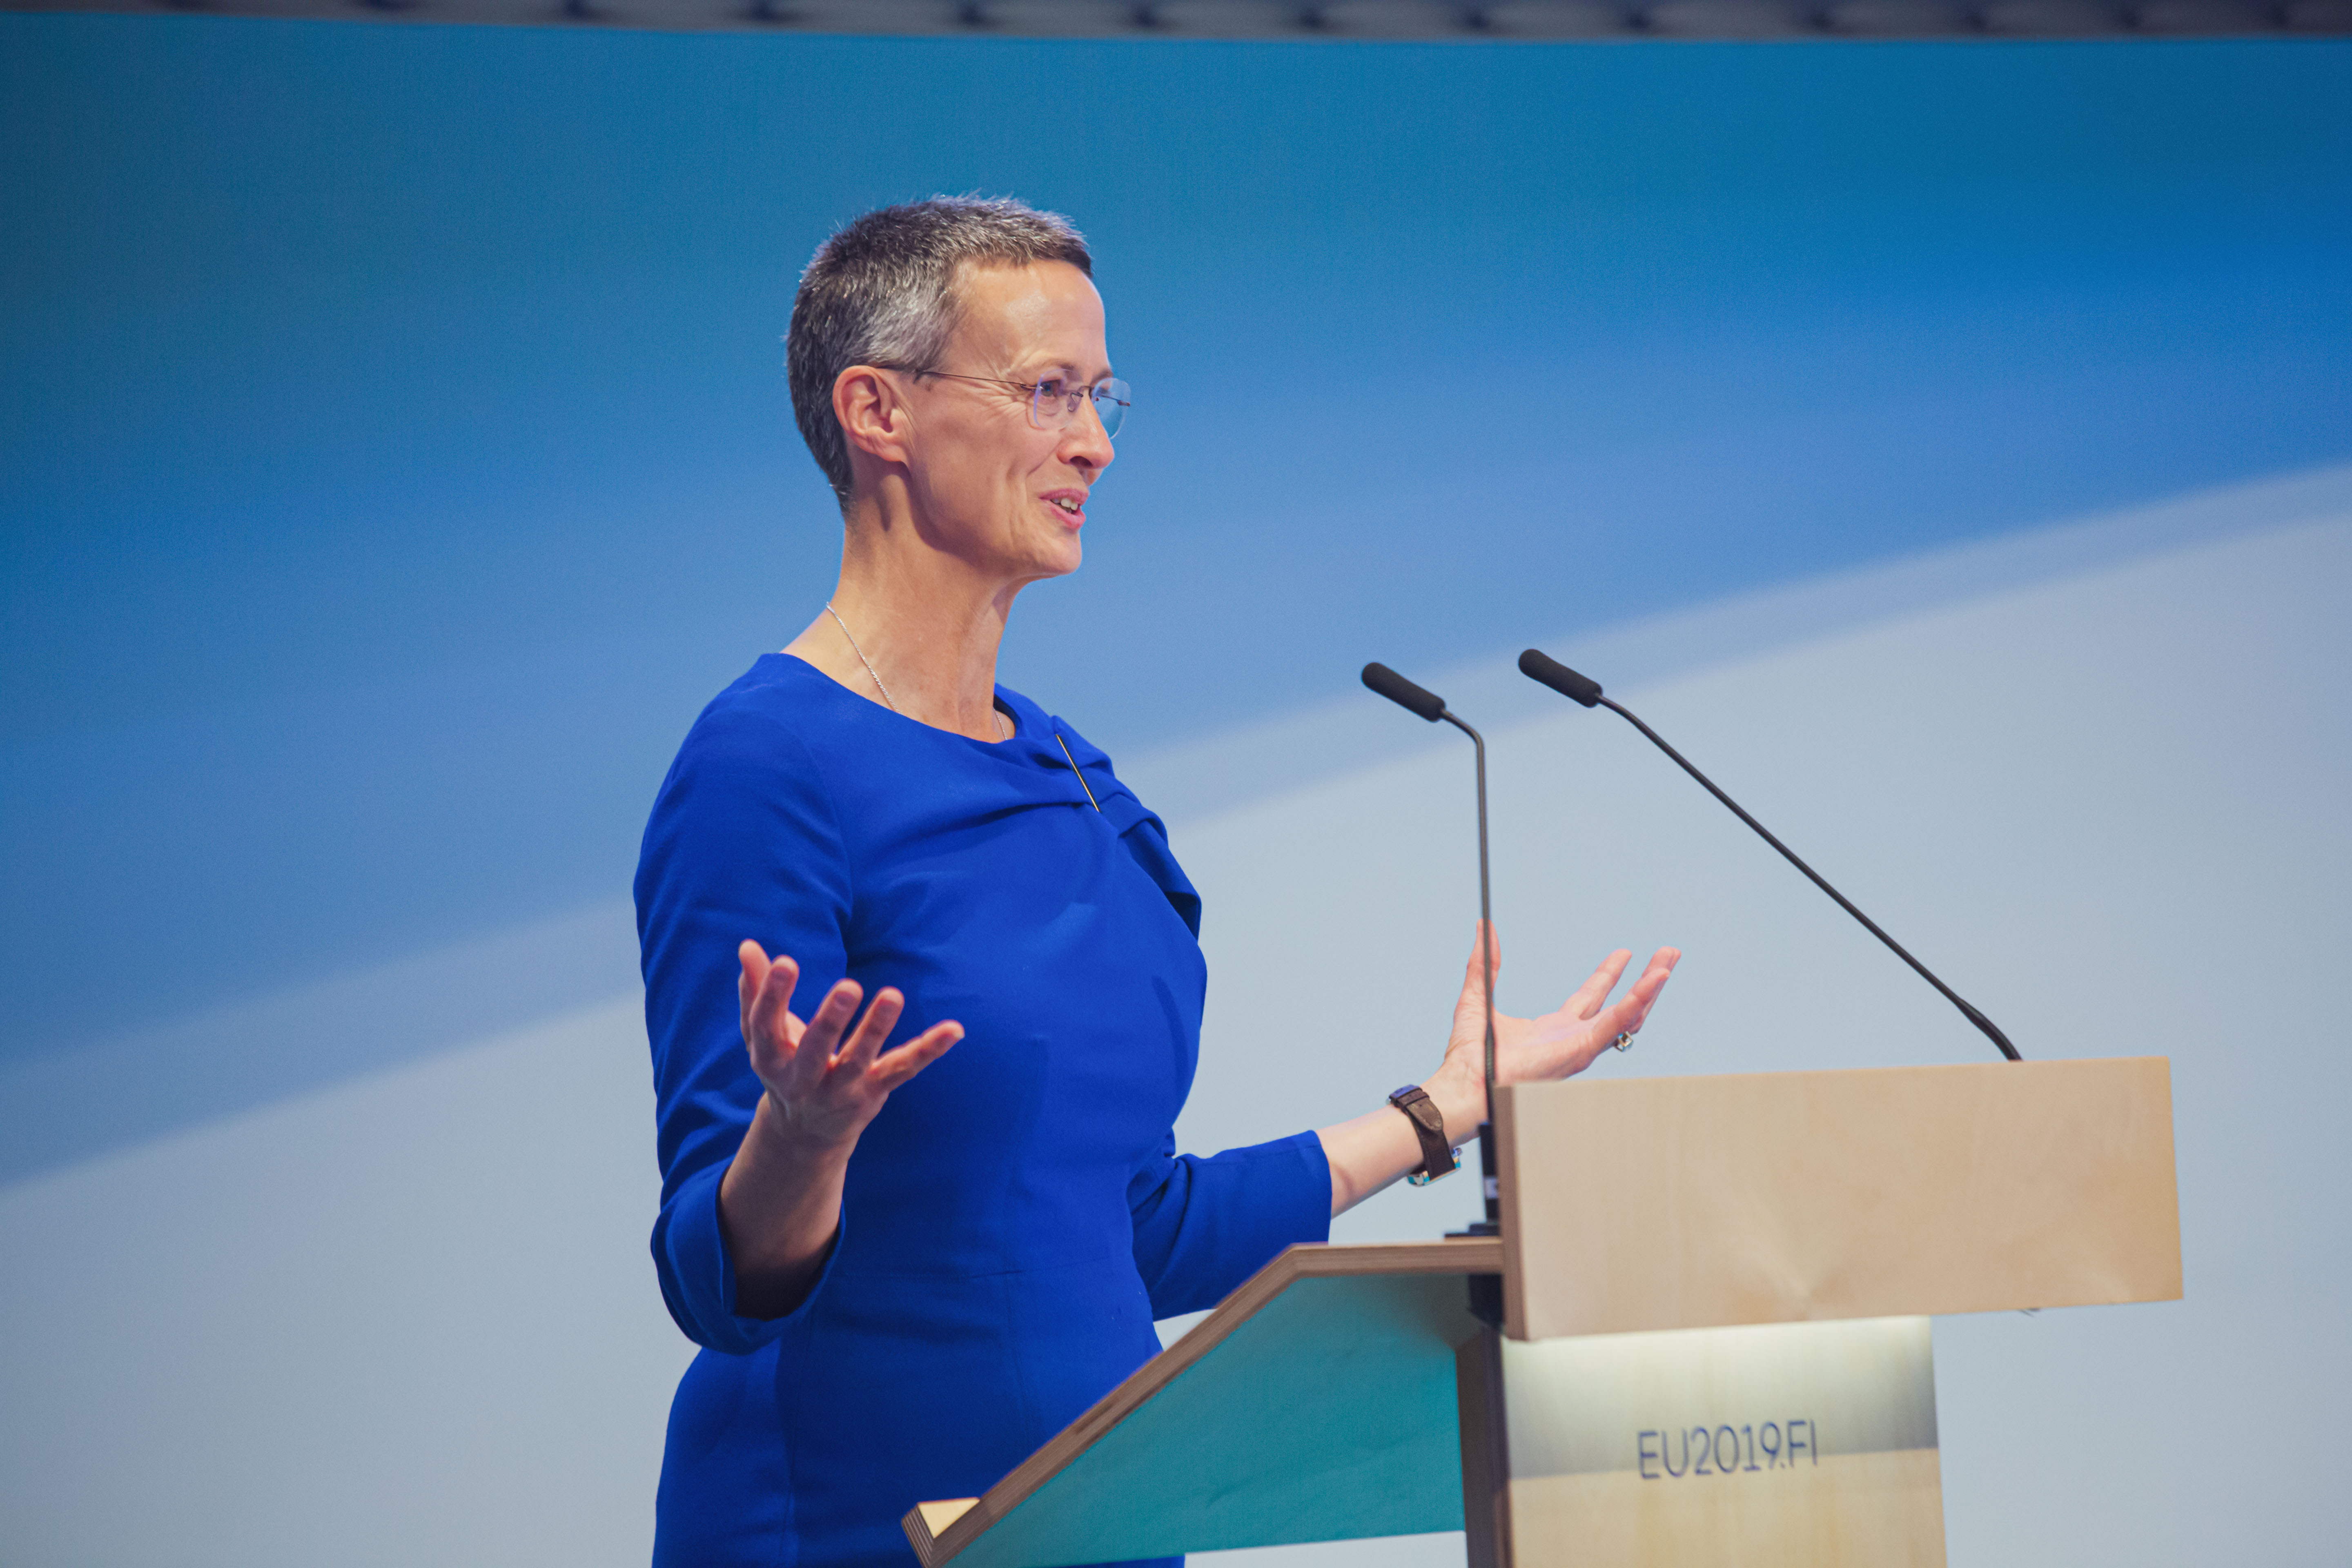 Gertrud Ingestad at SEMIC 2019